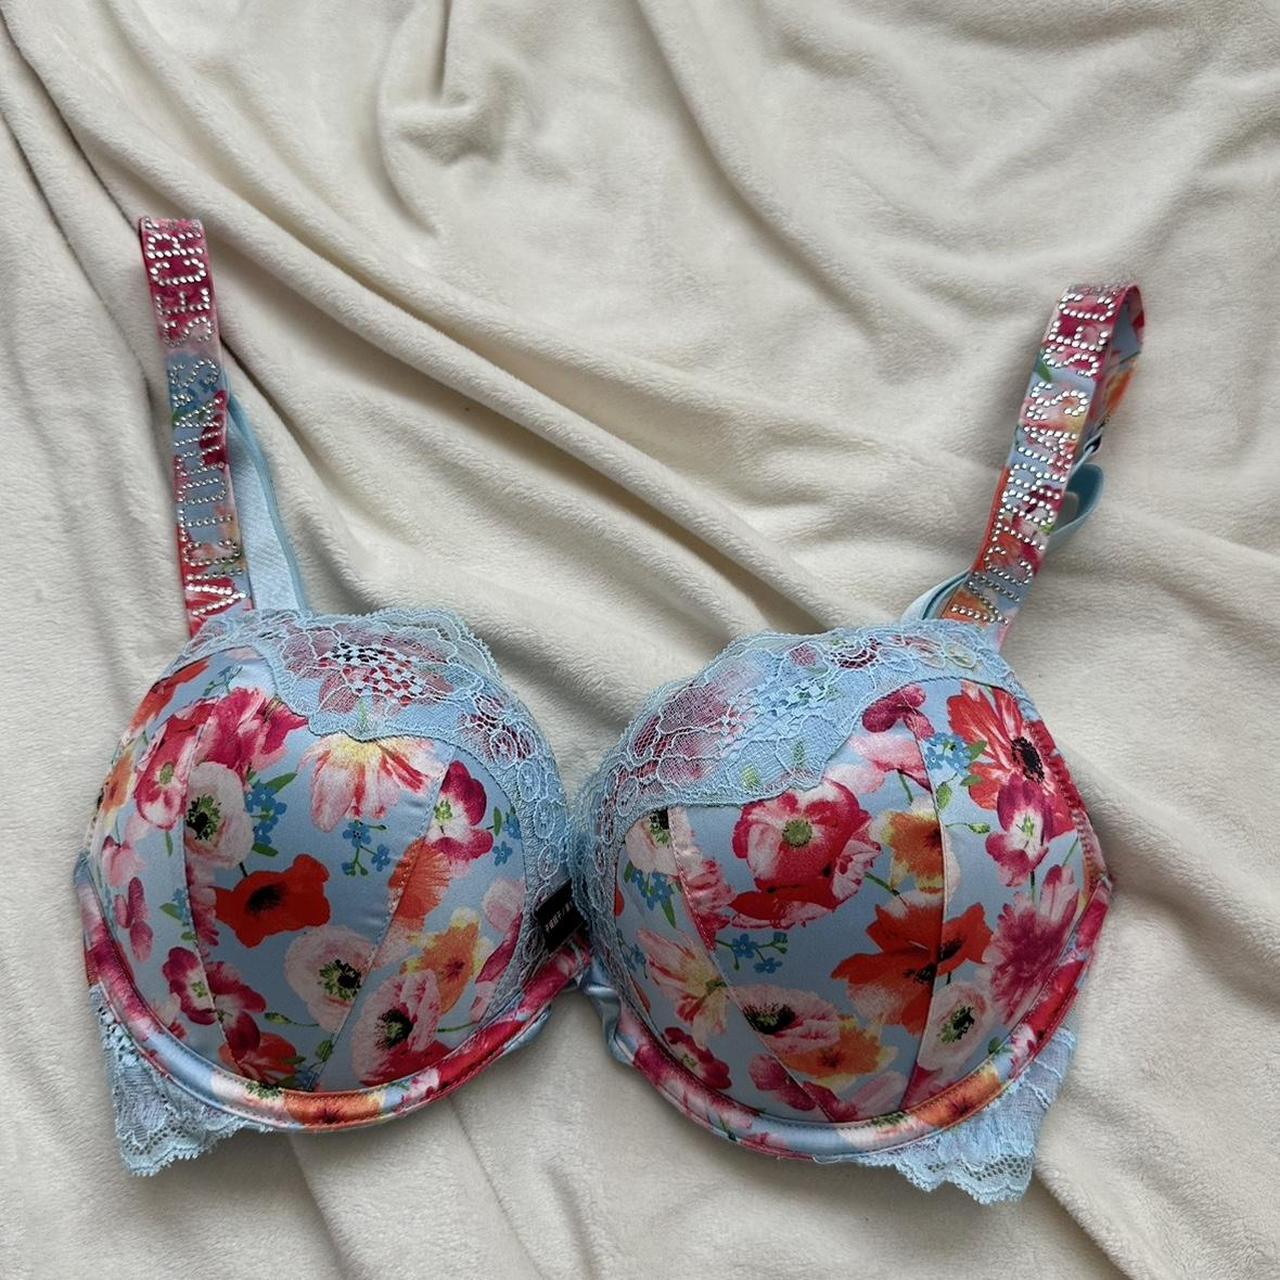 Victoria's Secret shine strap bra size 32c send - Depop